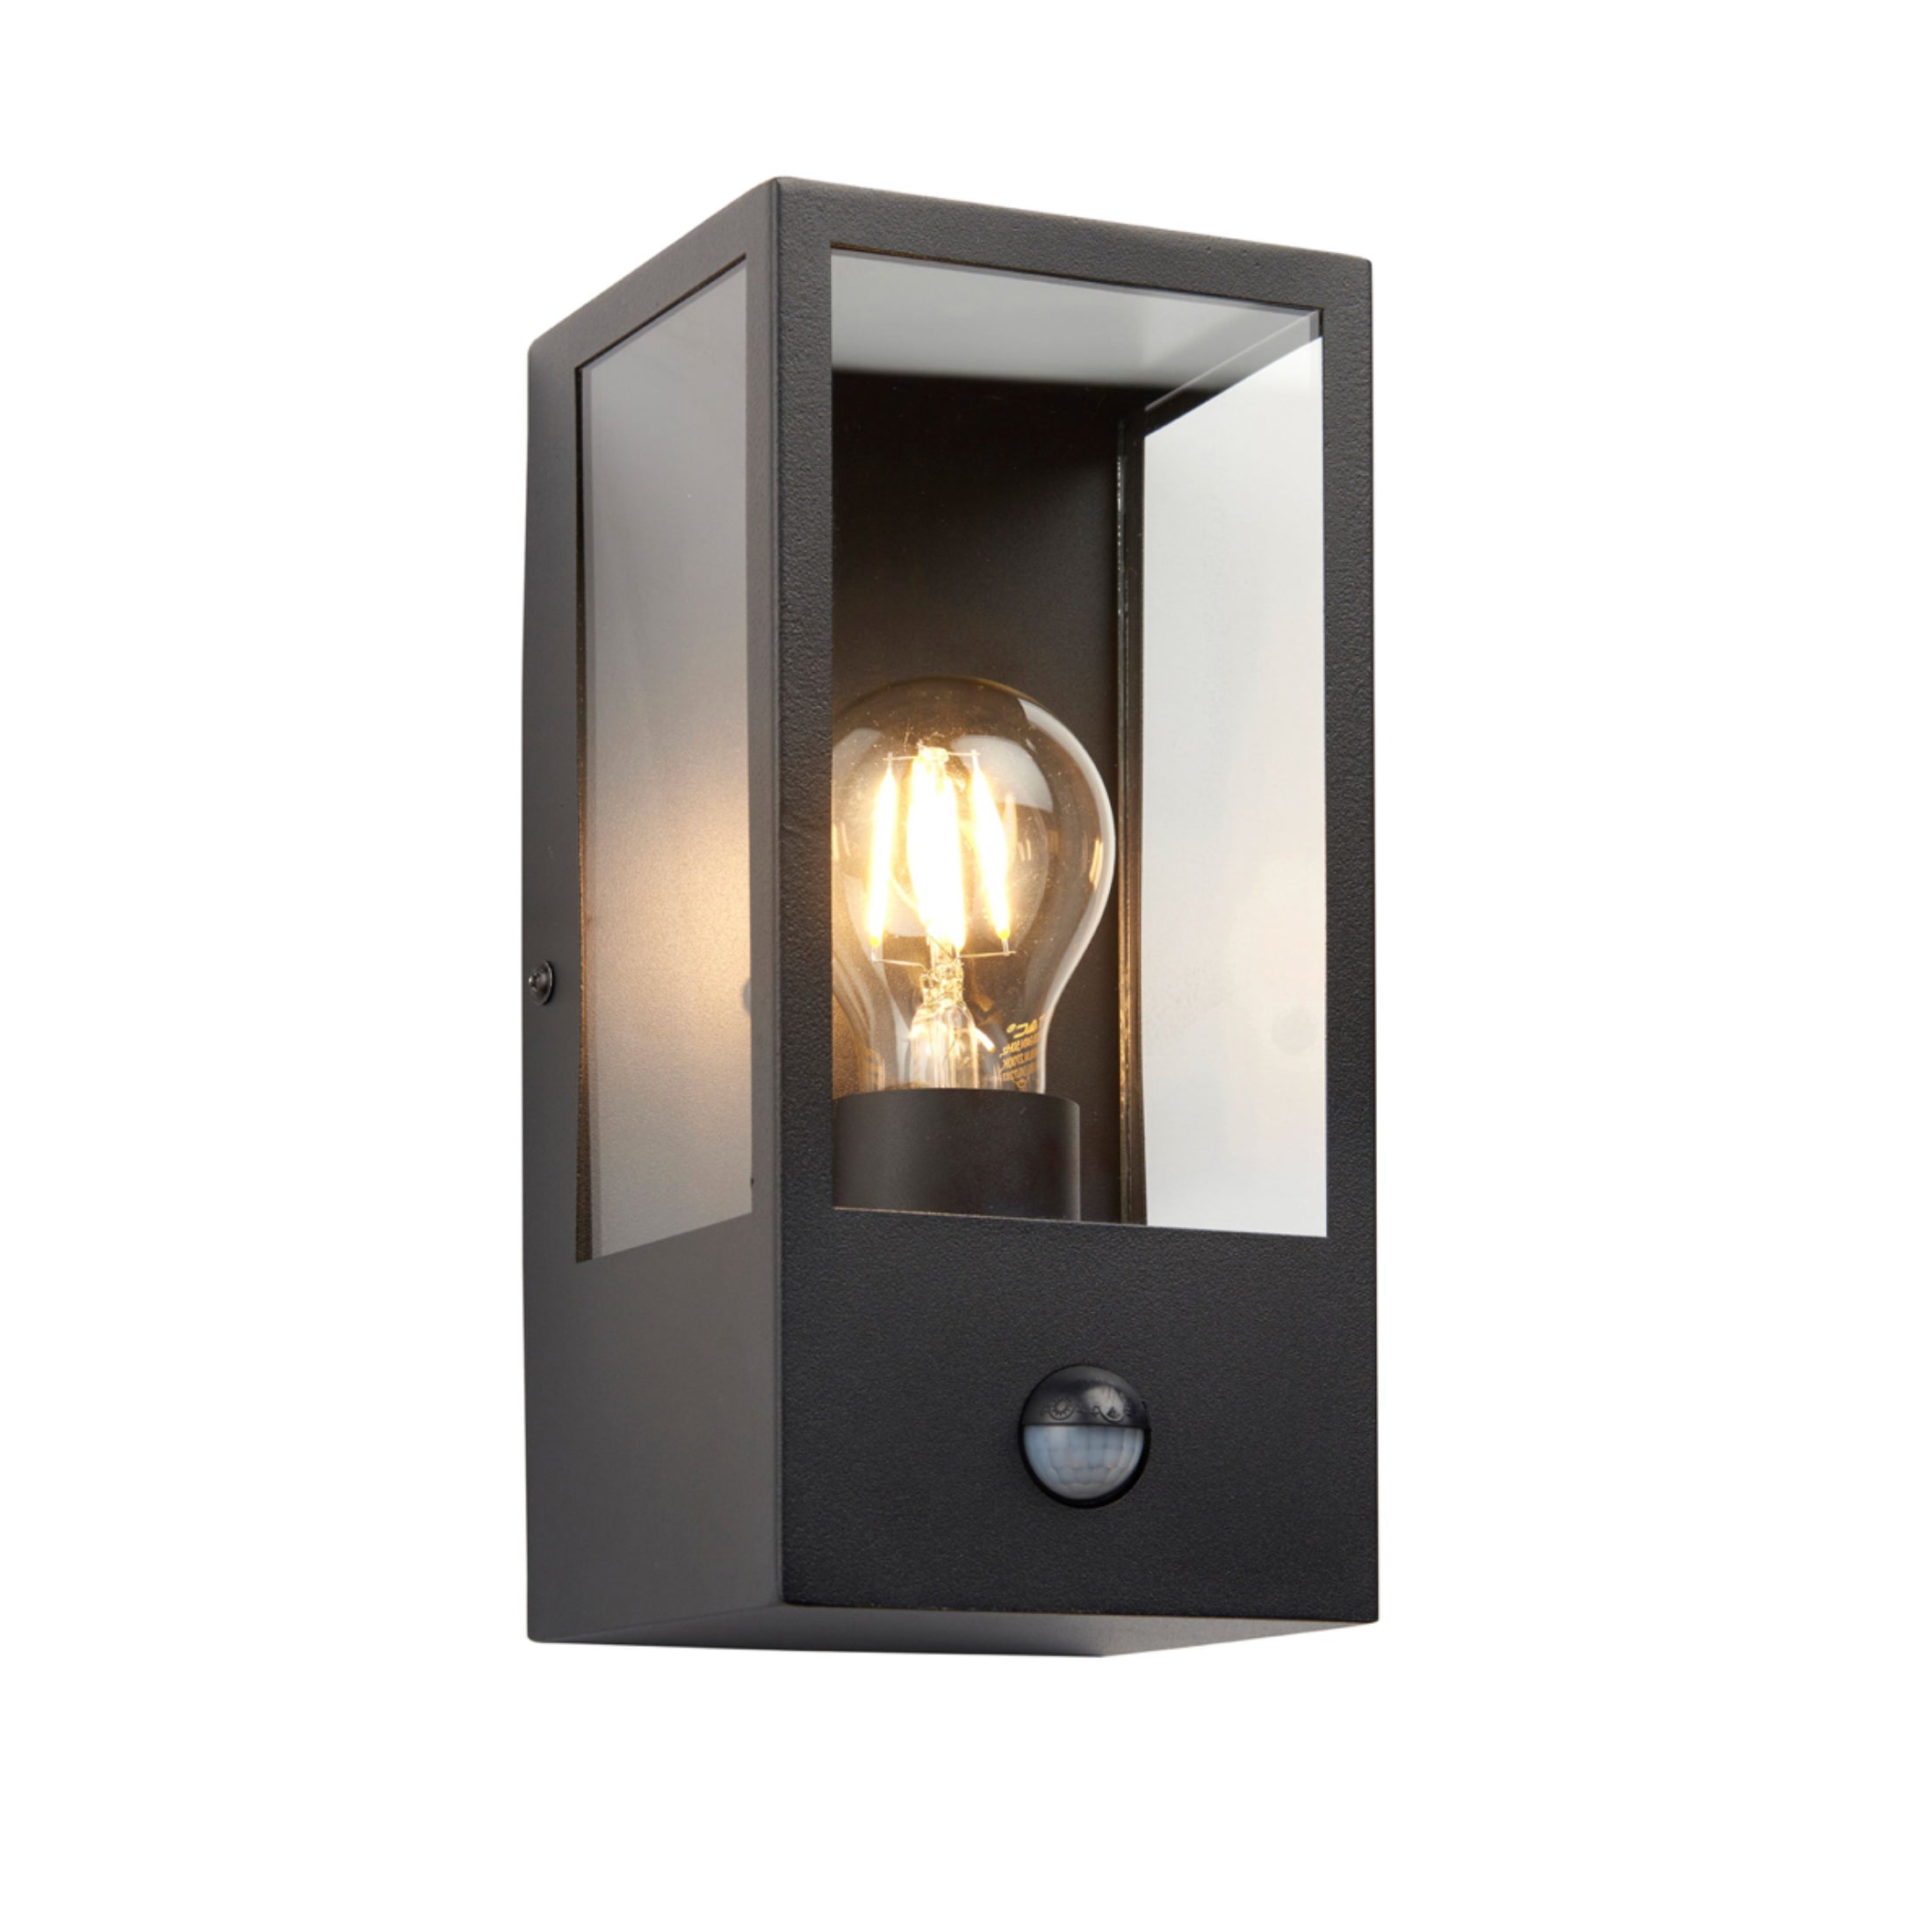 Outdoor Matt Black Box Lantern Wall Light with PIR Sensor 1